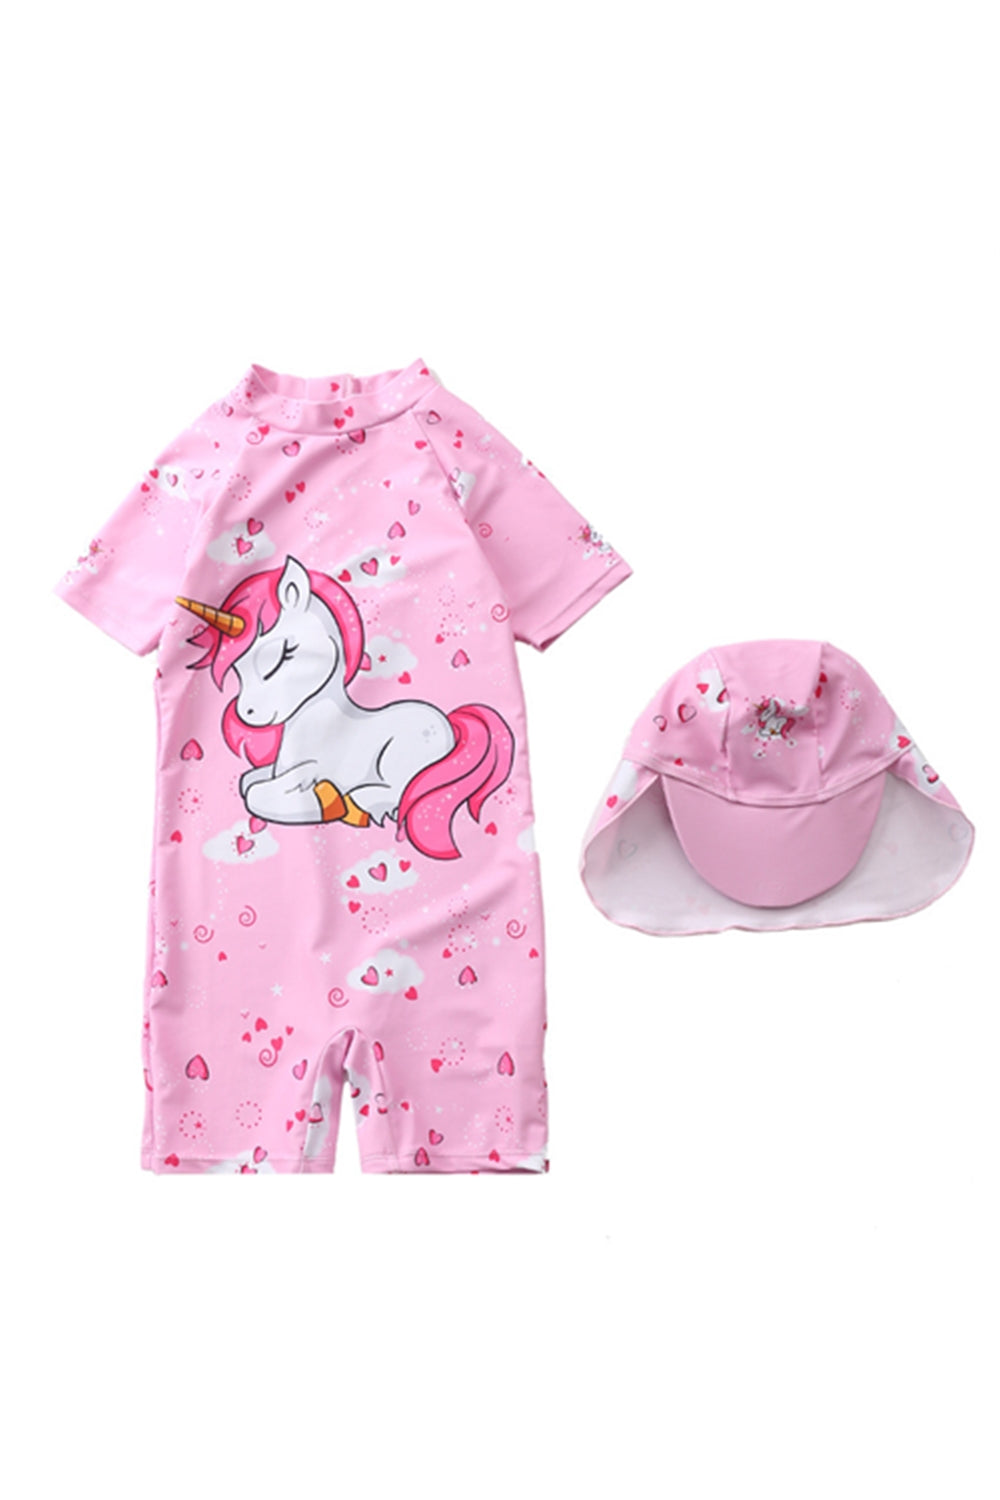 Cute Girl One Piece Pink Unicorn Baby Swimsuit